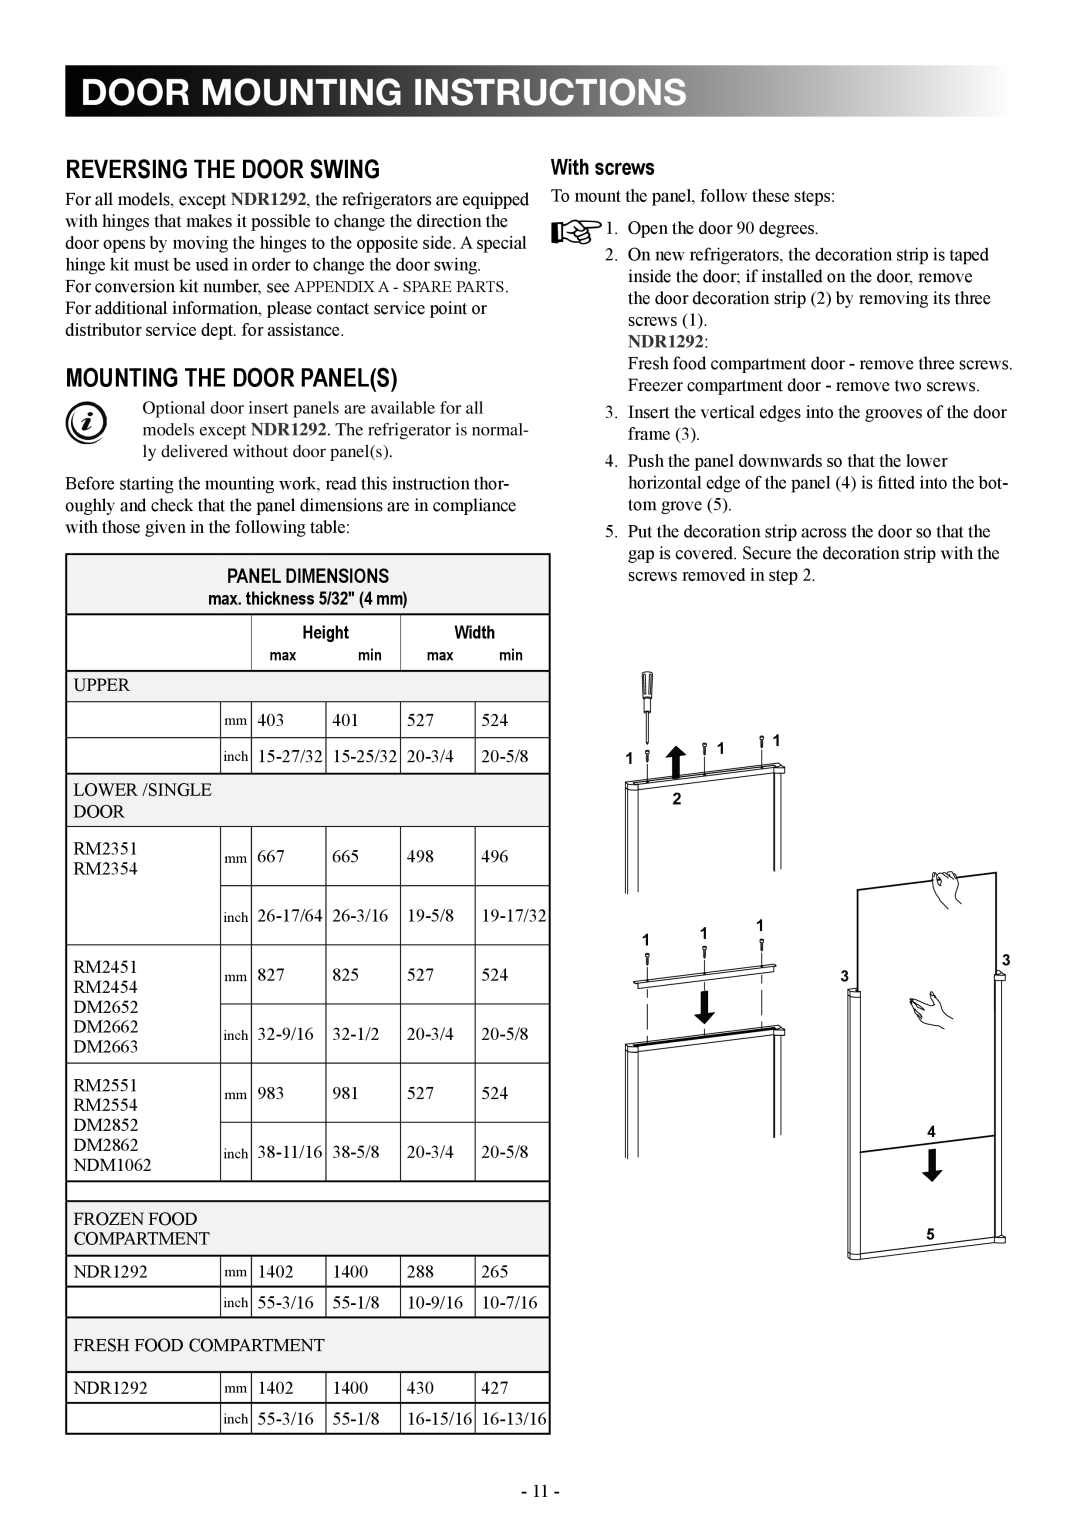 Dometic DM2862 door mounting instructions, Reversing the door swing, Mounting the door panels, Panel dimensions, NDR1292 